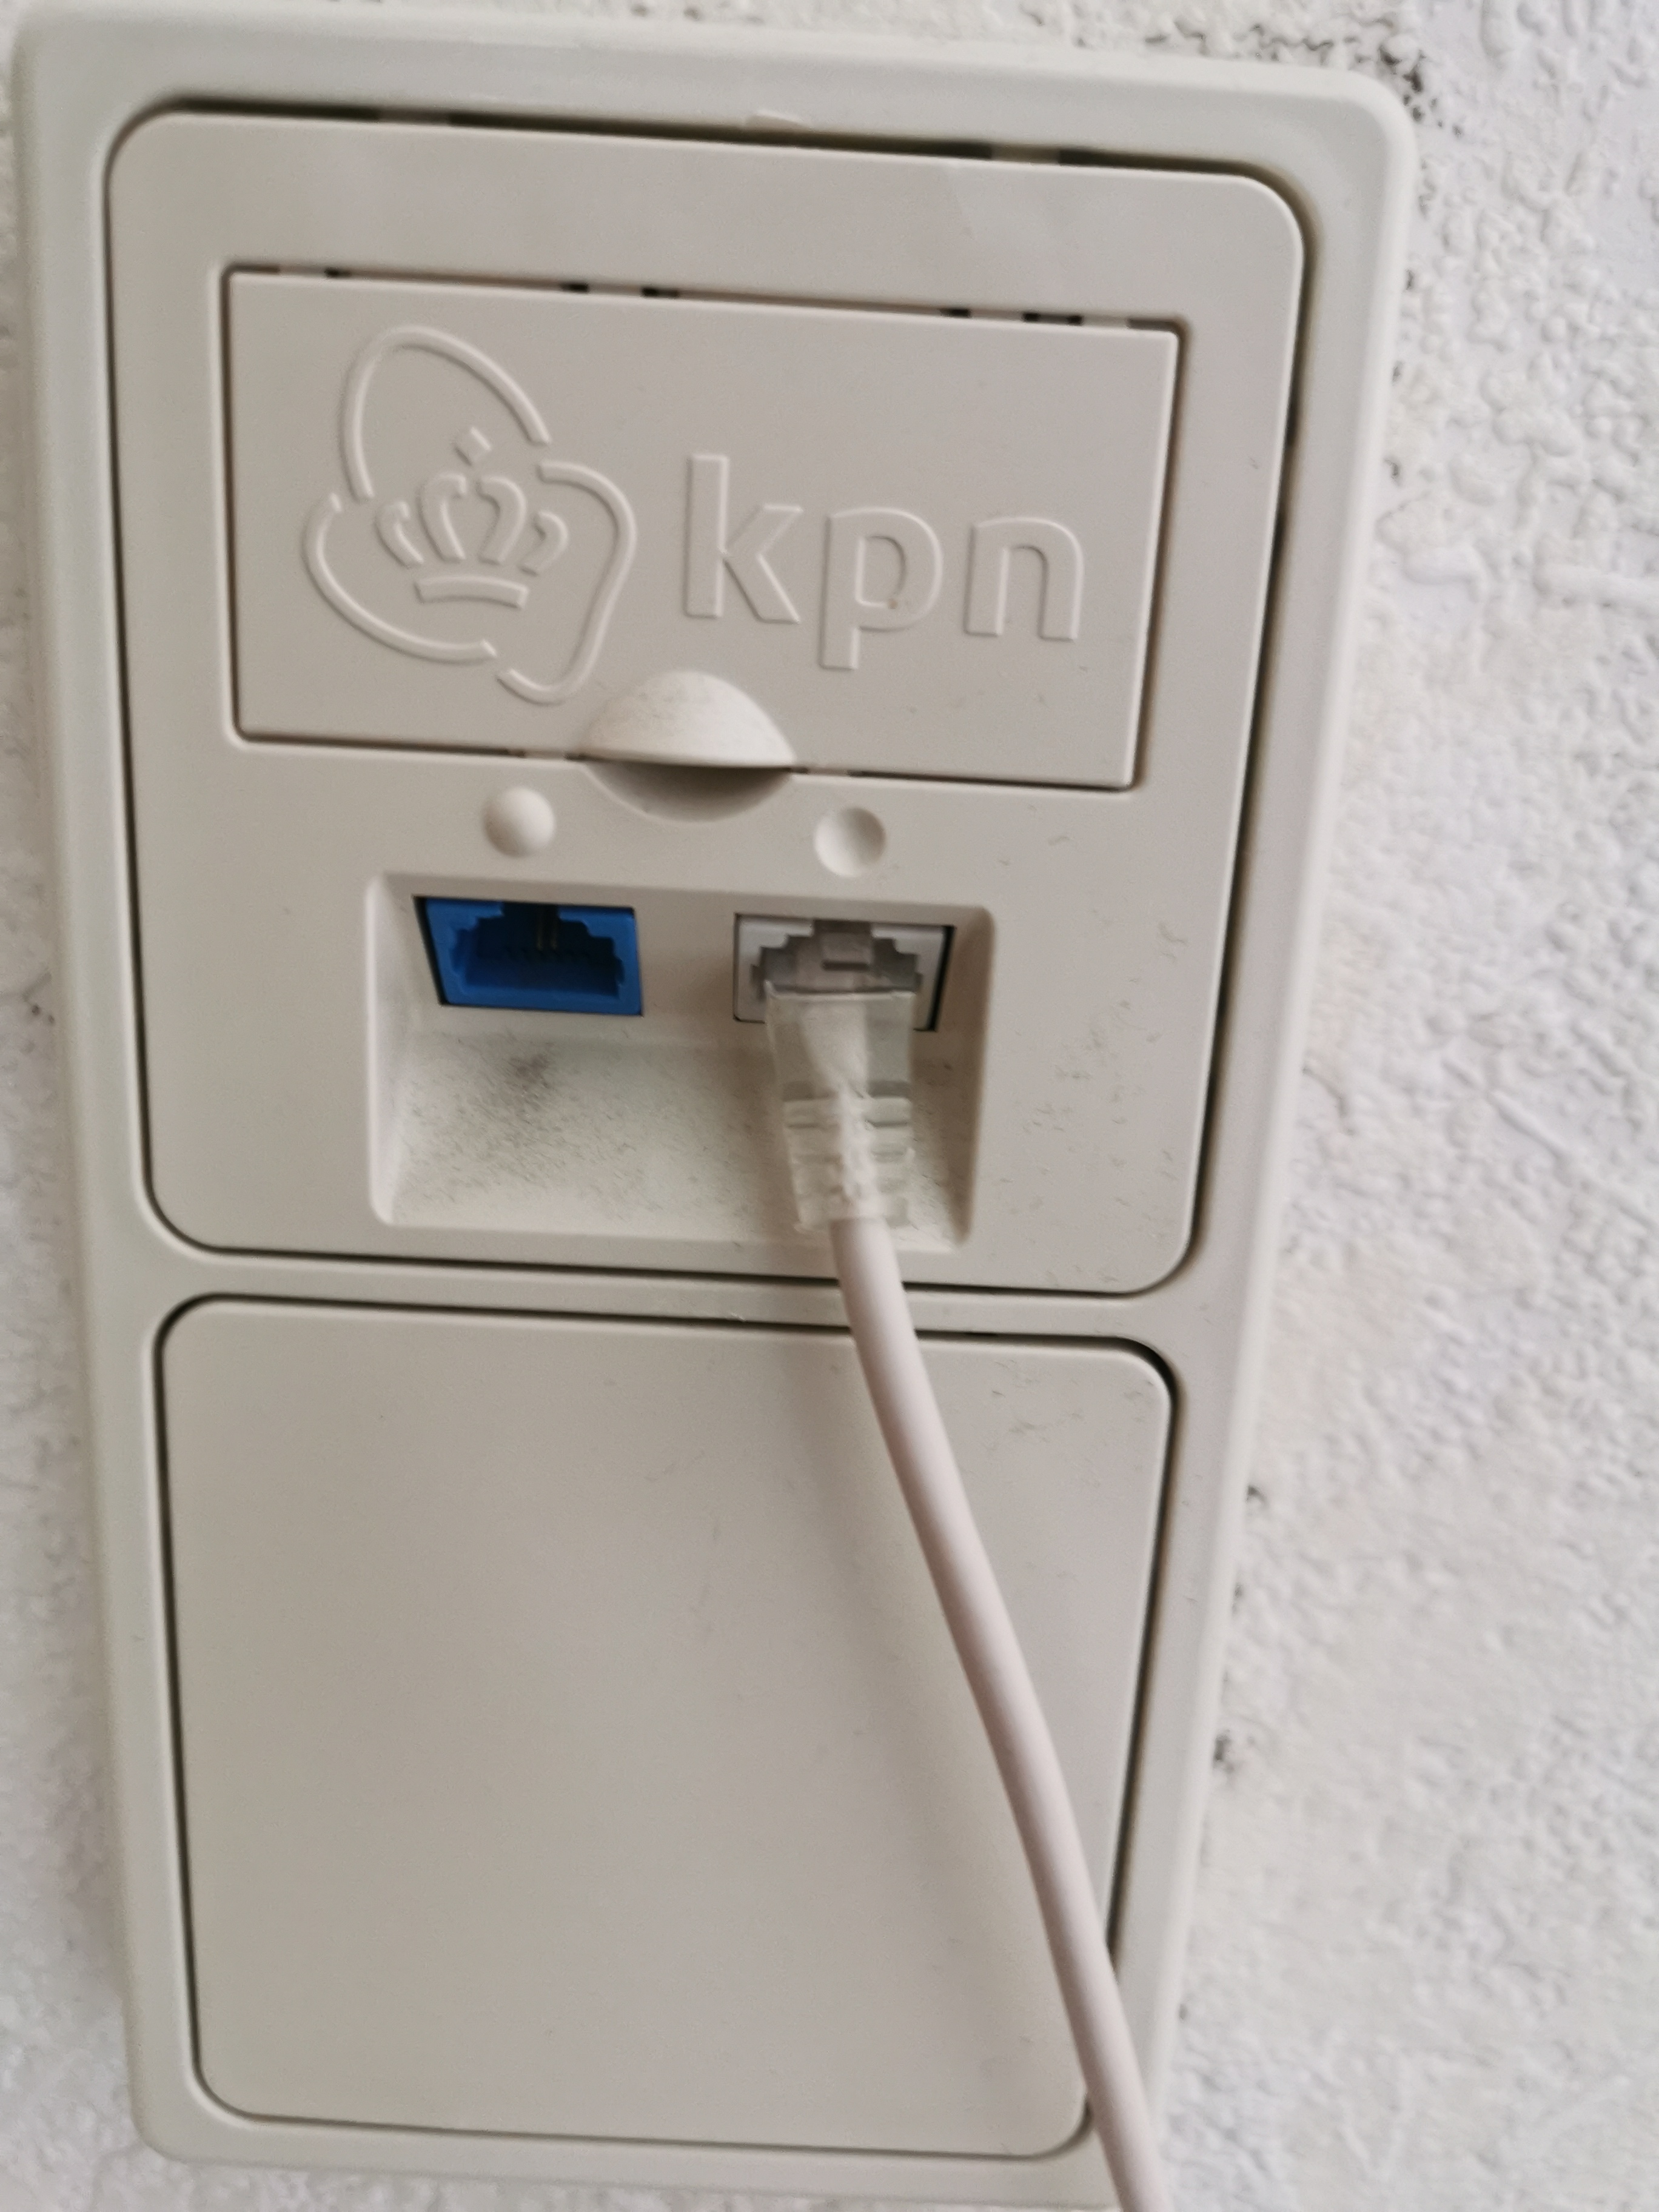 maandag band beoefenaar Welke kabel heb ik nodig tussen IS/RA punt en modem? | KPN Community